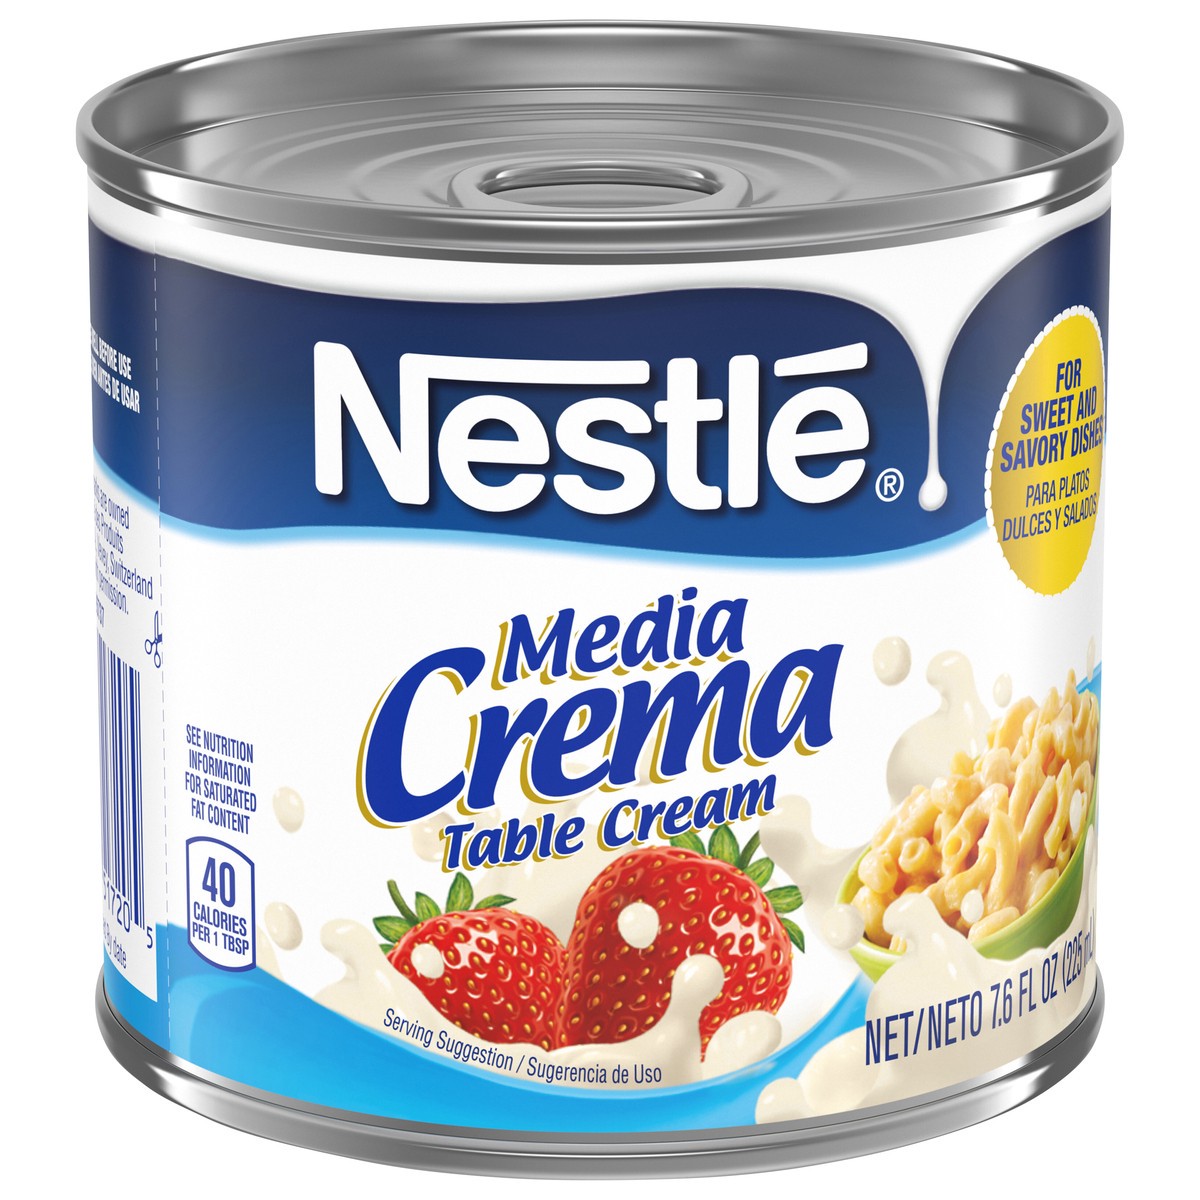 slide 1 of 9, Media Crema Nestle Media Crema Table Cream, 7.6 oz